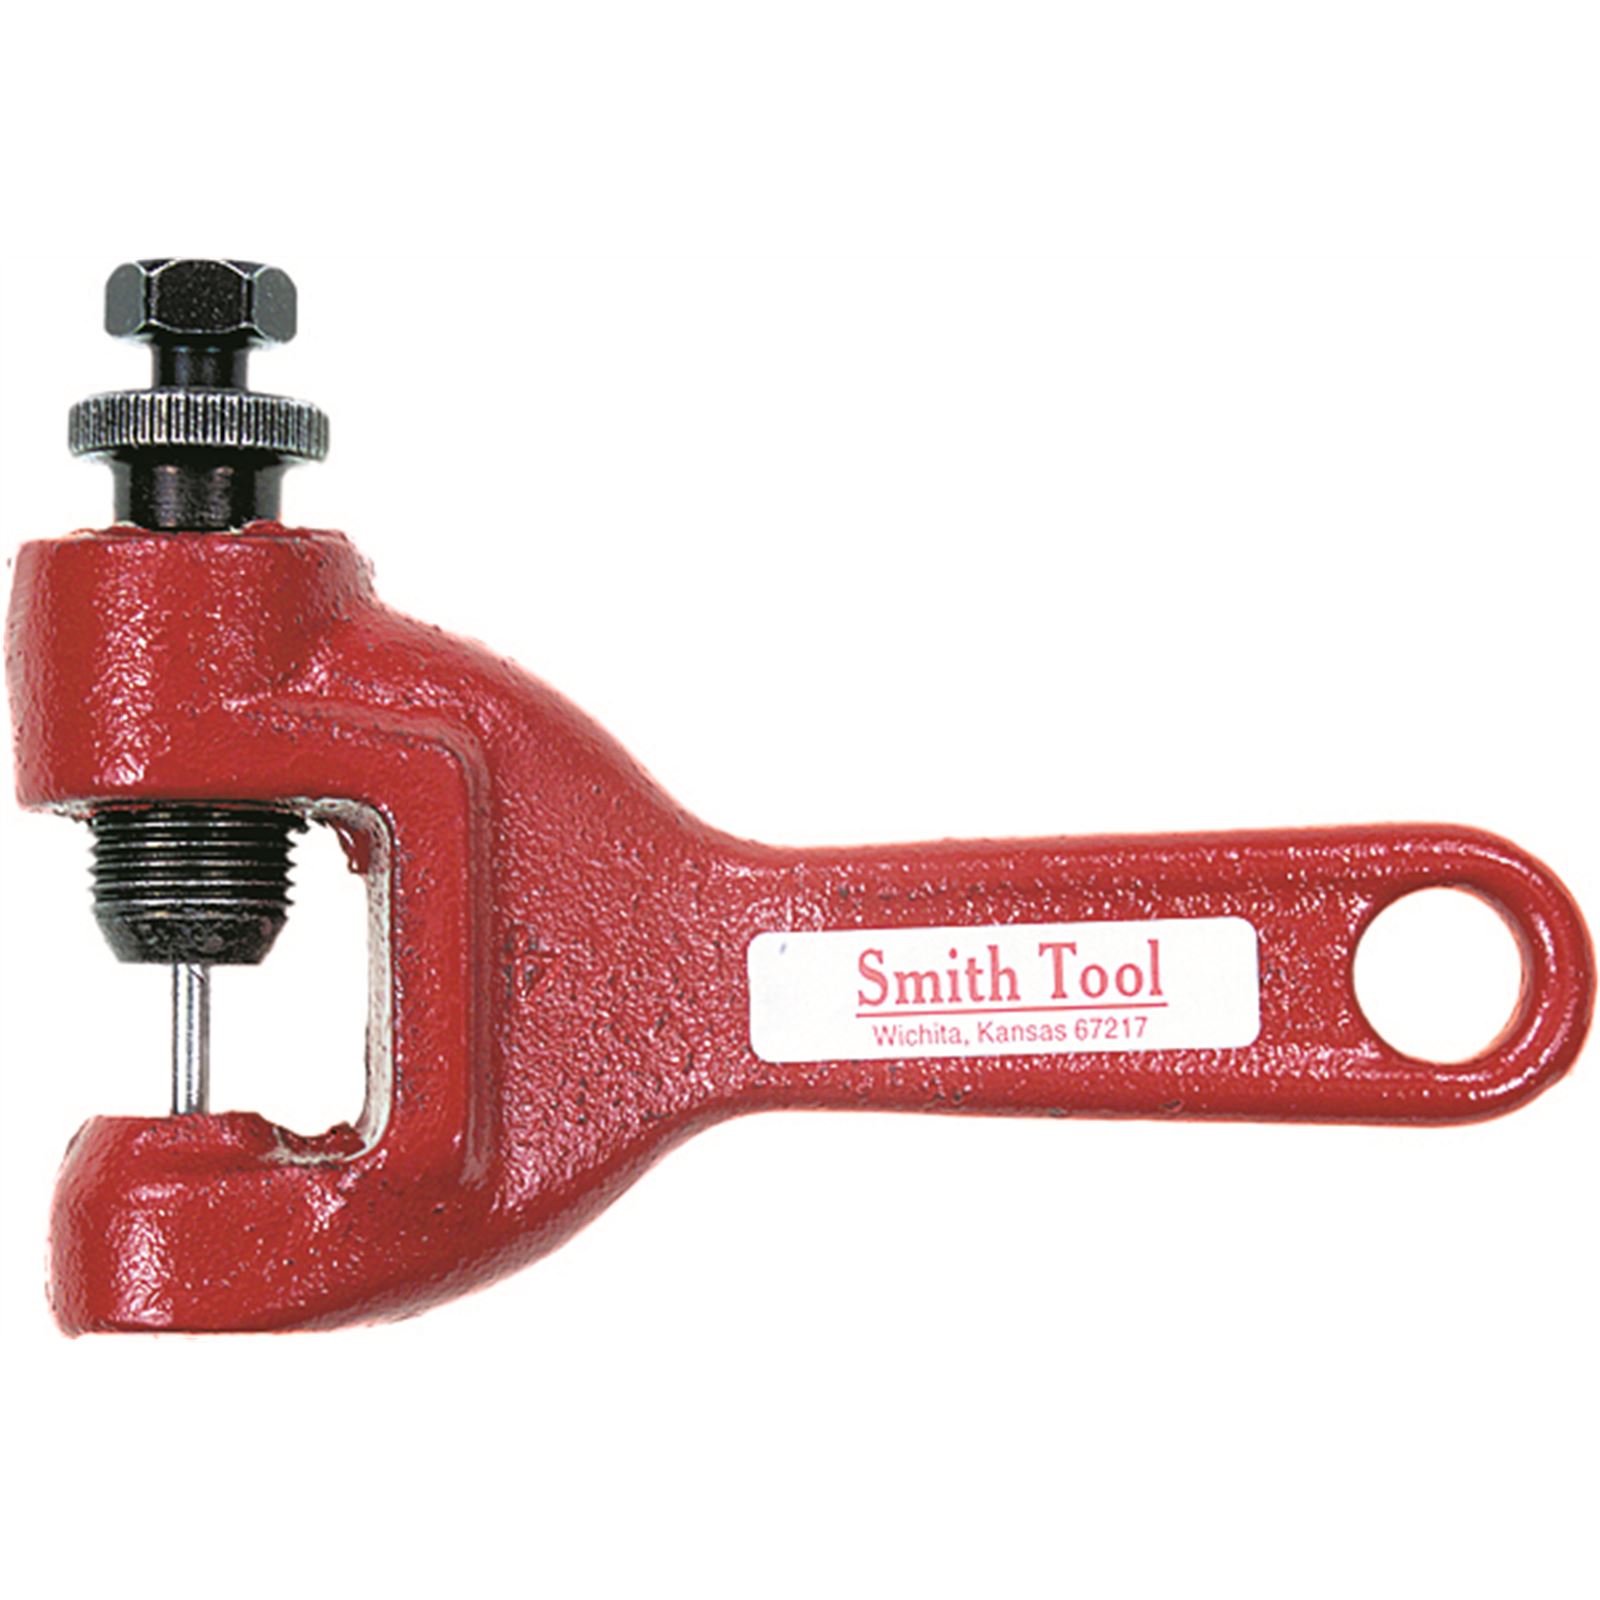 Smithtool Chain-A-Part Chain Breaker